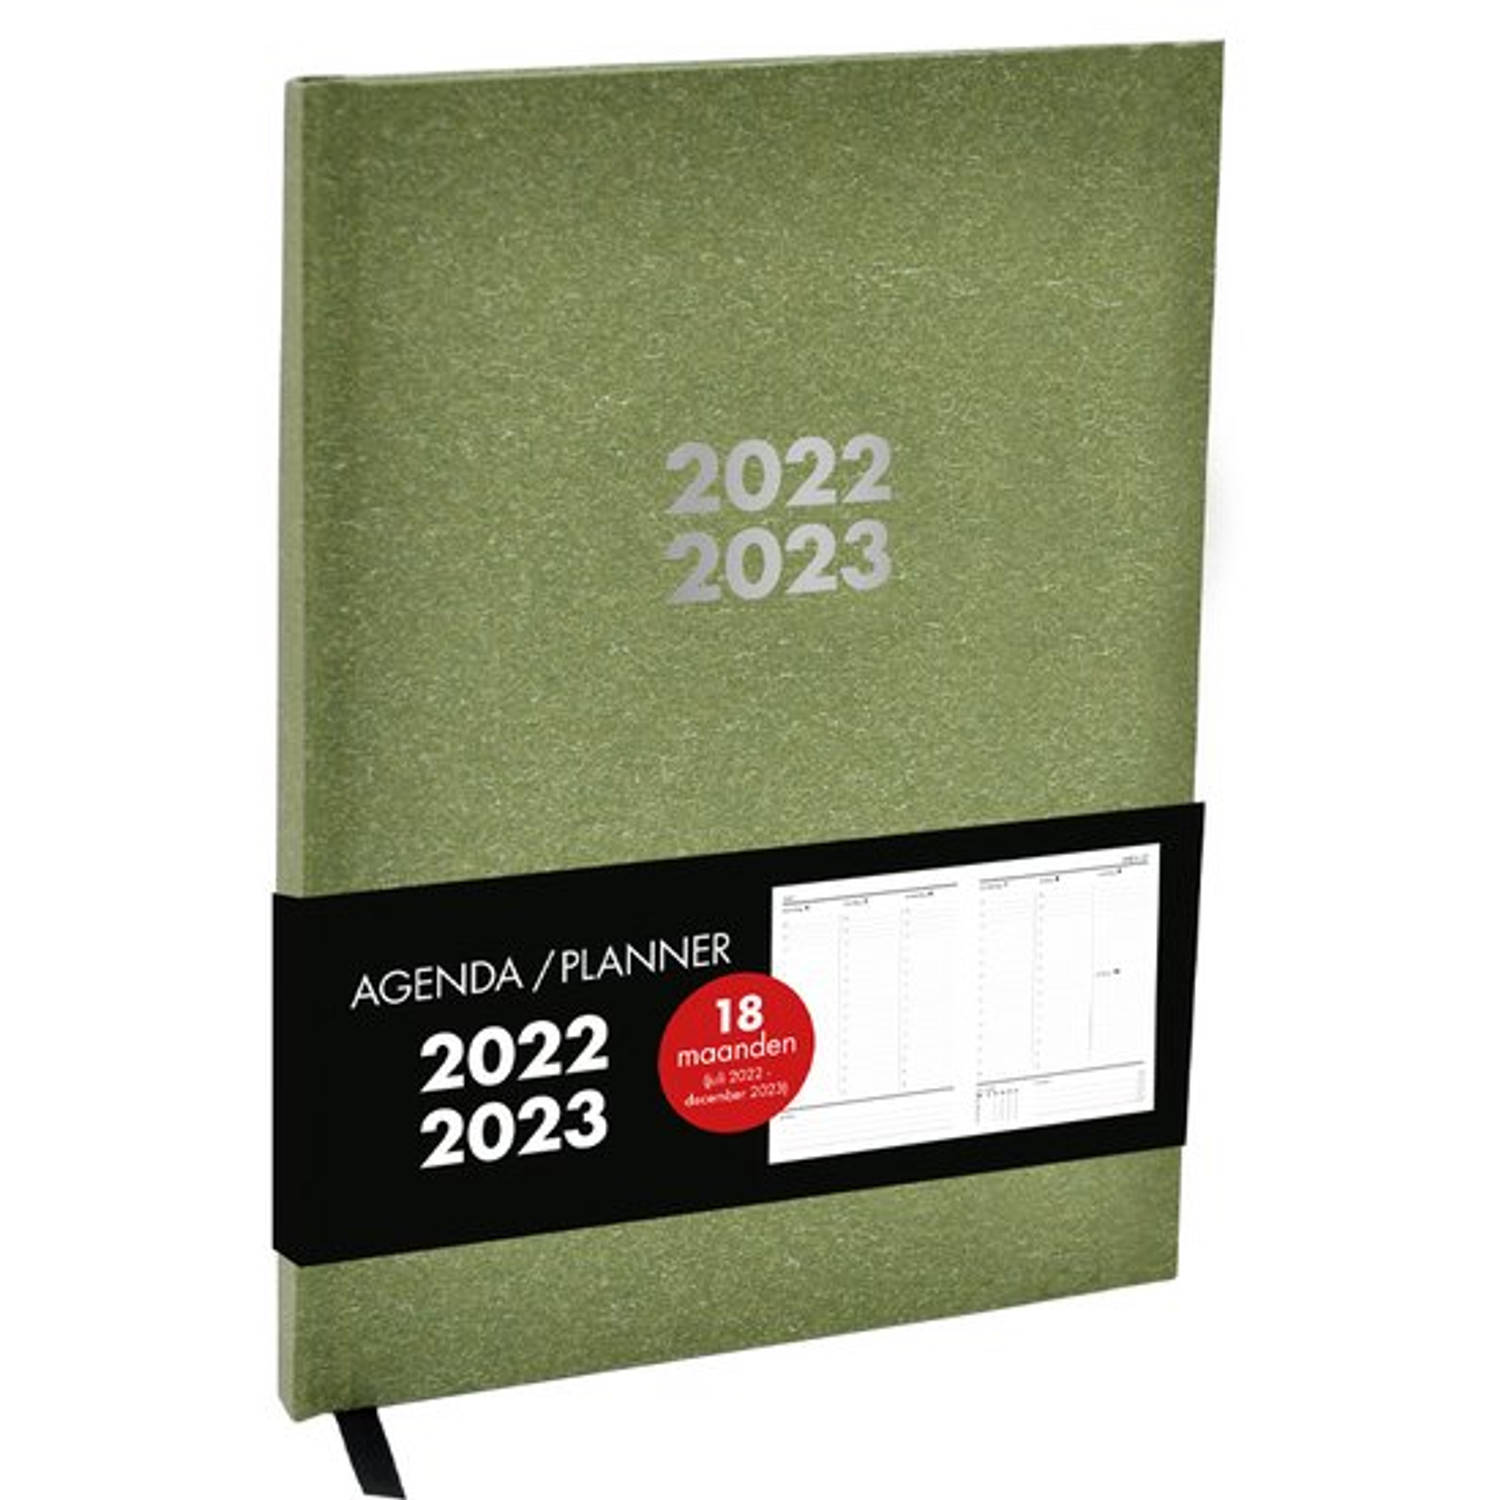 Agenda / planner 18 maanden Juli 2022 - december 2023 A5 groen